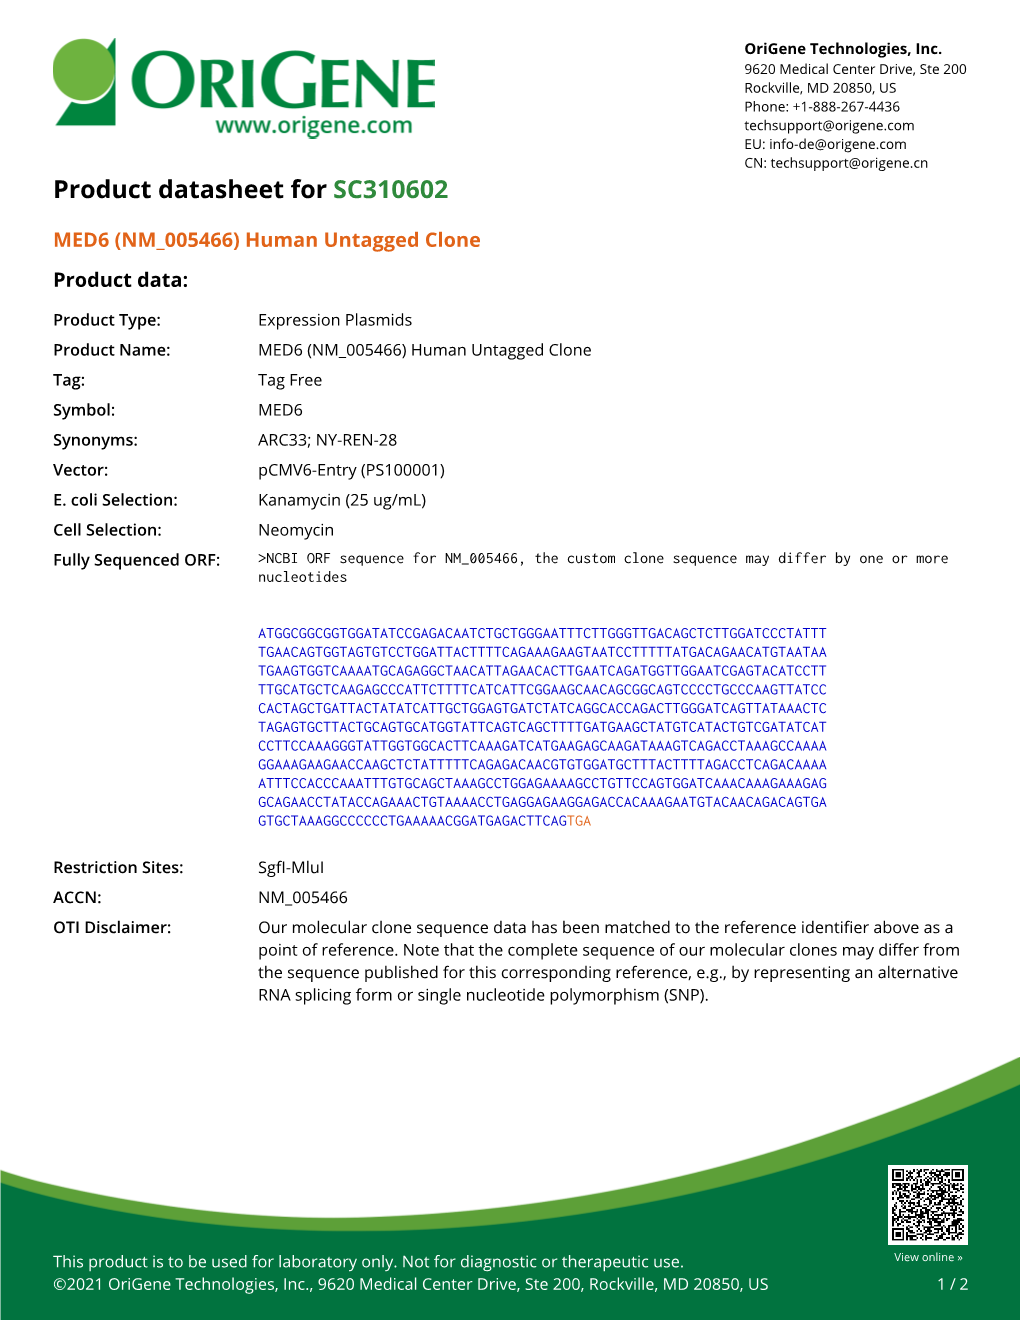 MED6 (NM 005466) Human Untagged Clone – SC310602 | Origene